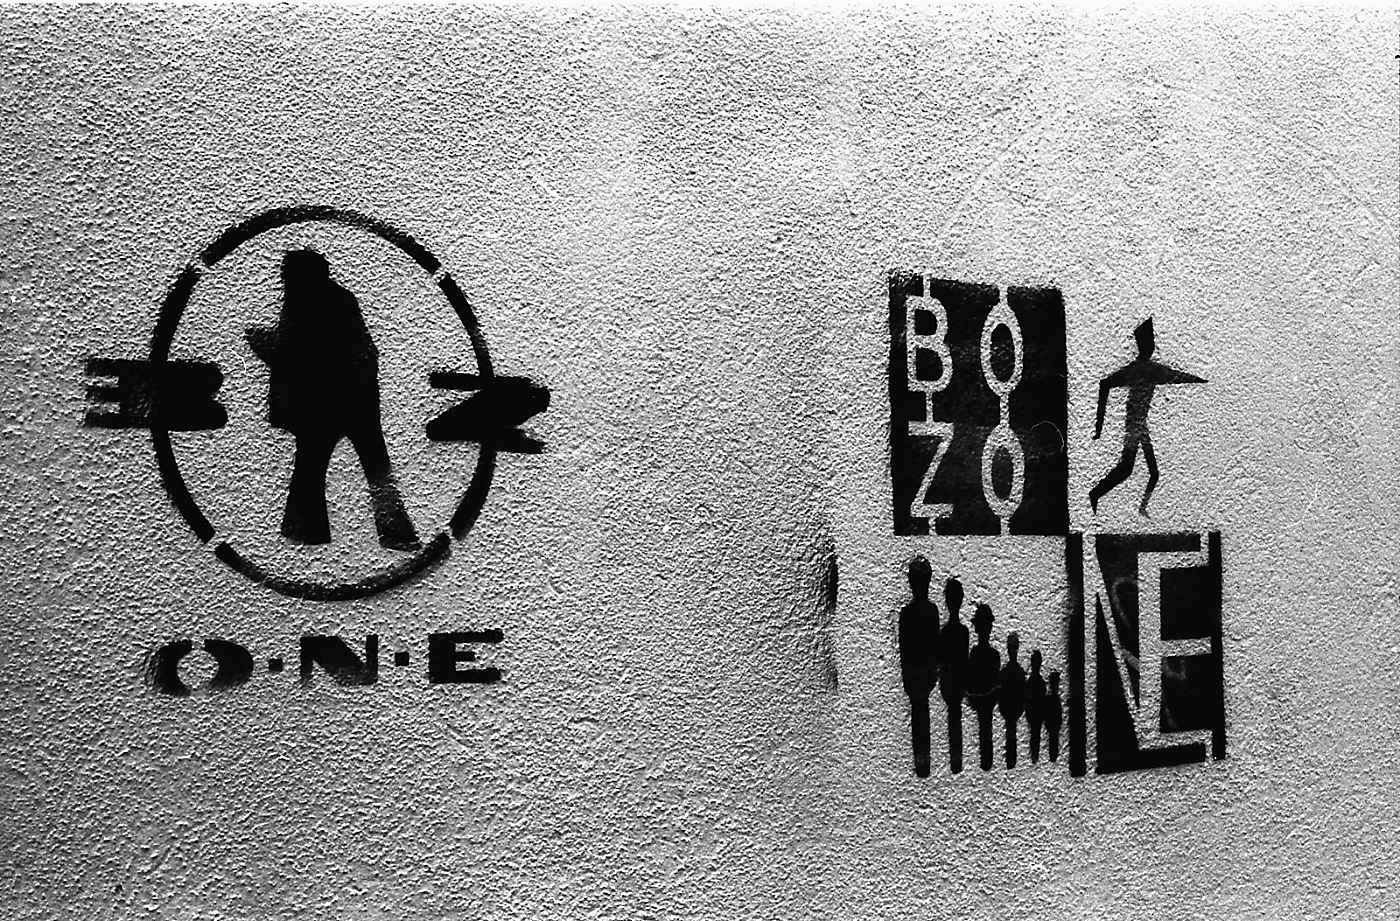 Bozone graffiti